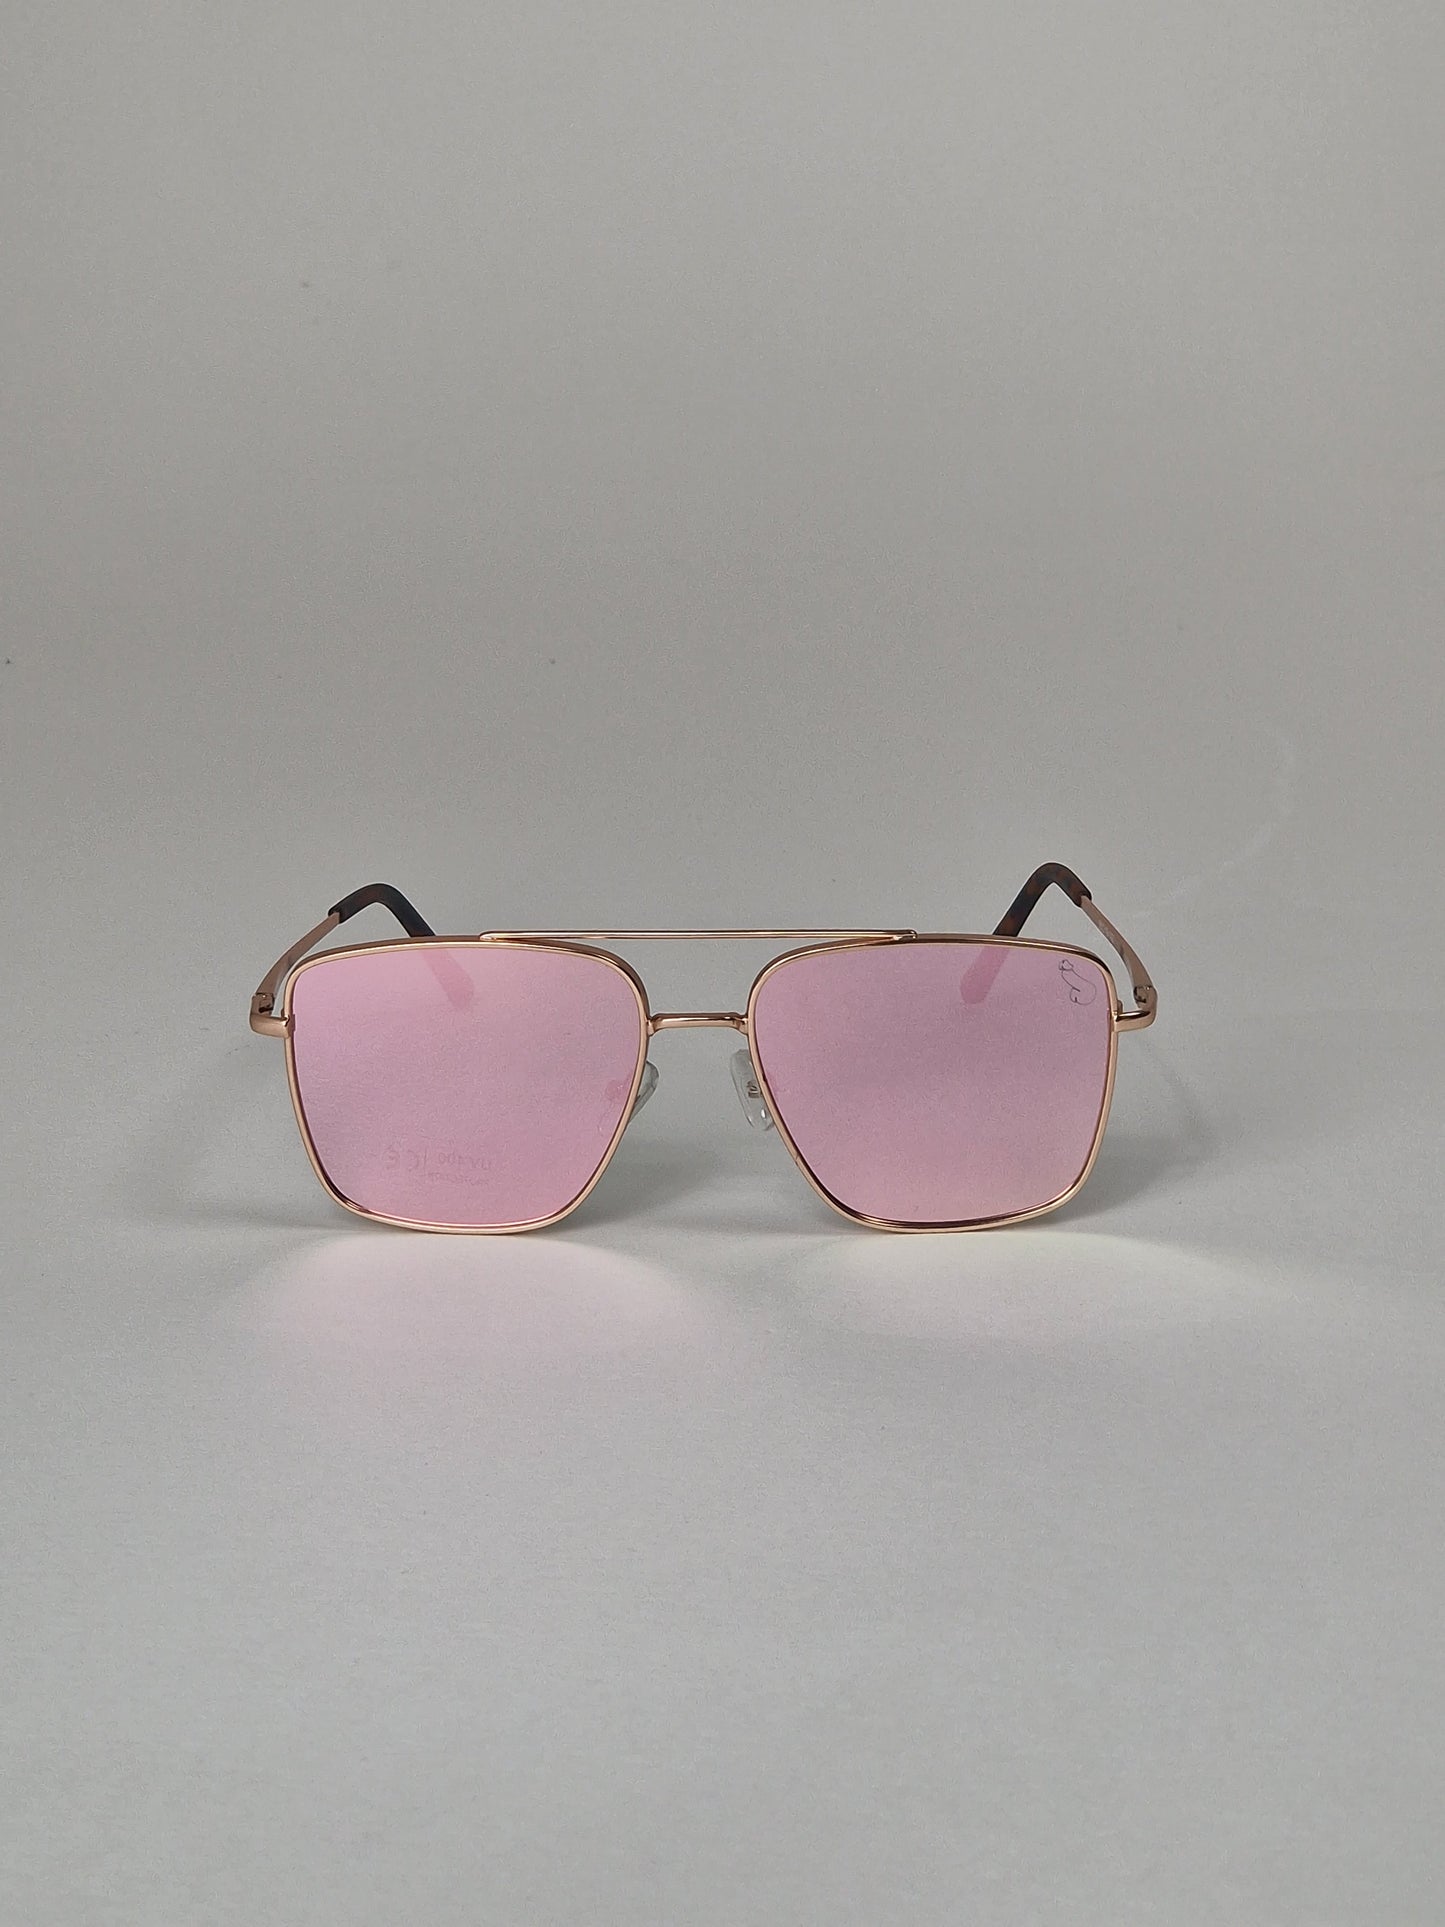 Sunglasses, model 34 - Pink mirror lenses